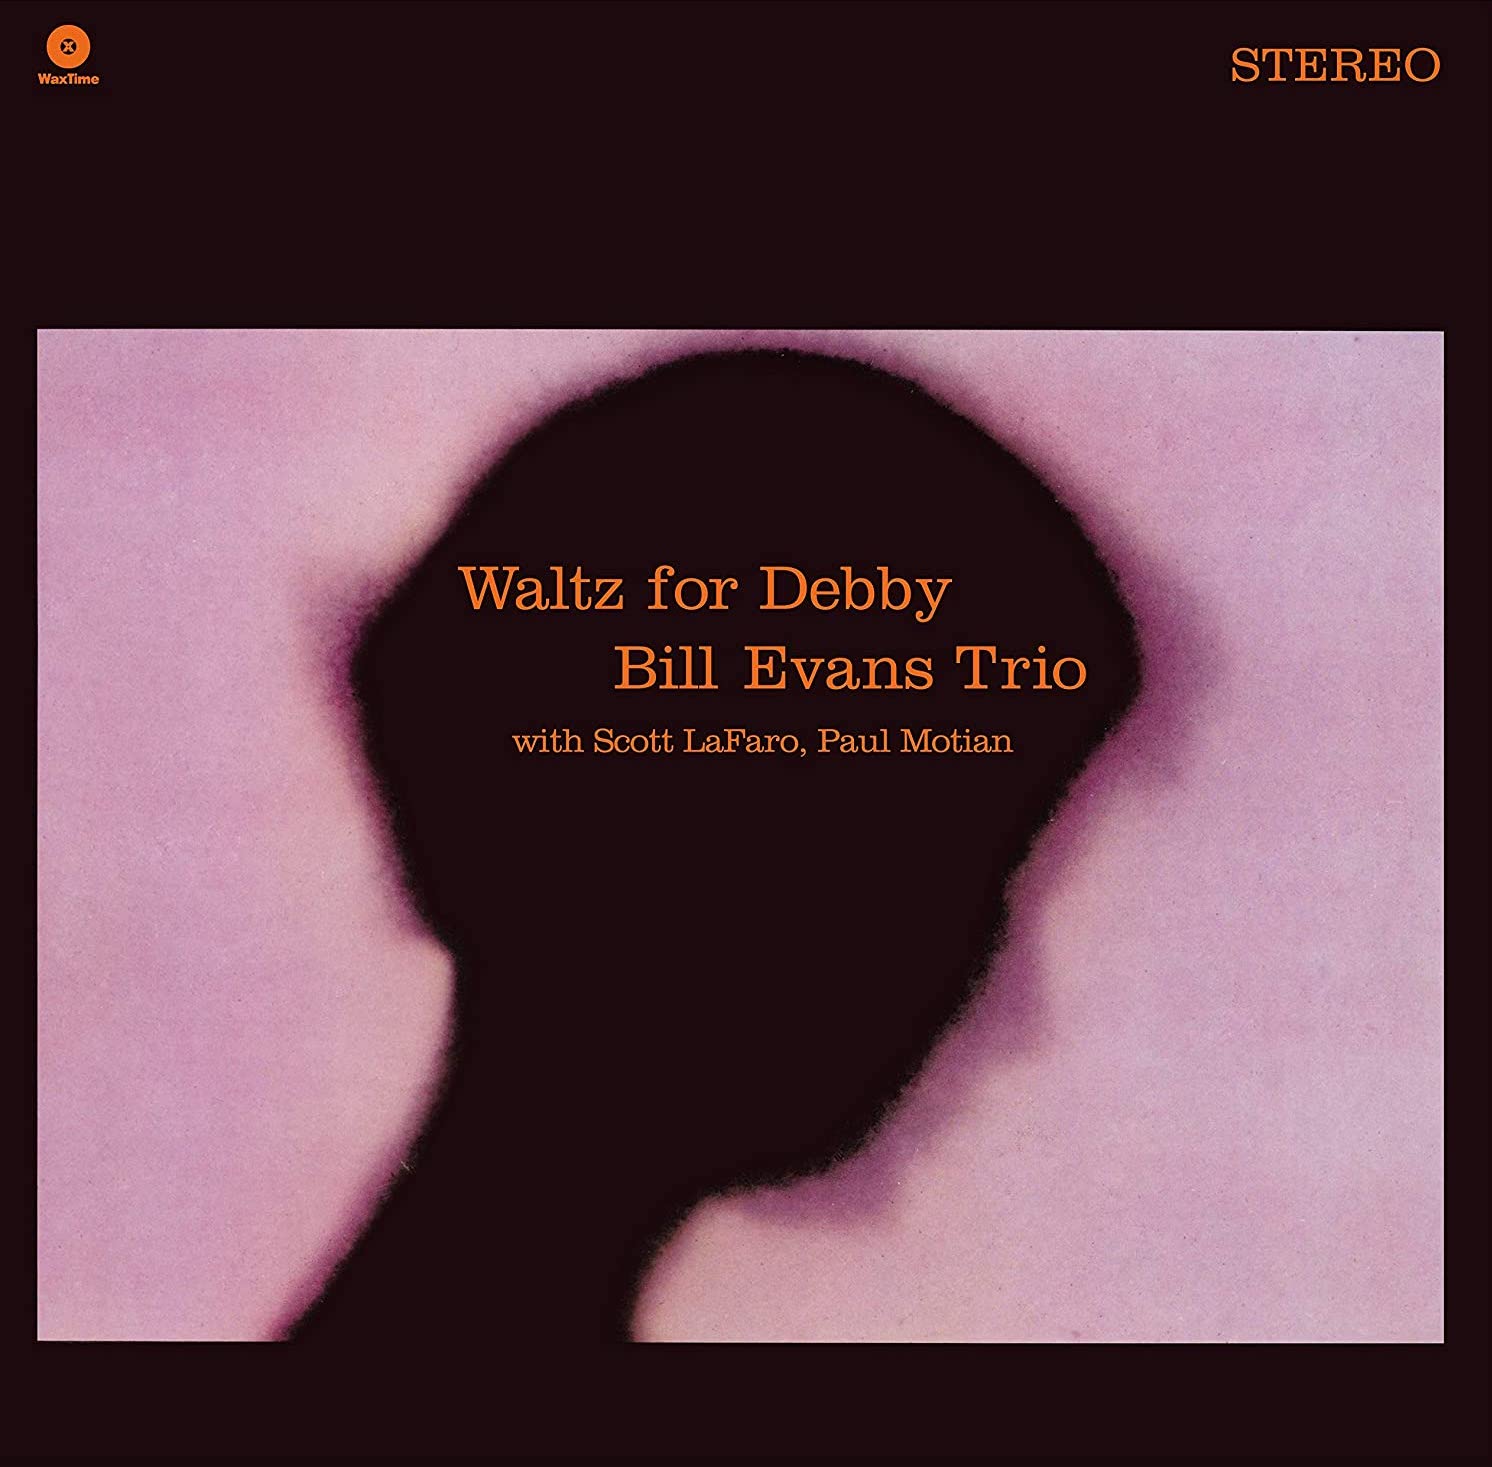 Bill Evans Trio Waltz for Debby cover artwork